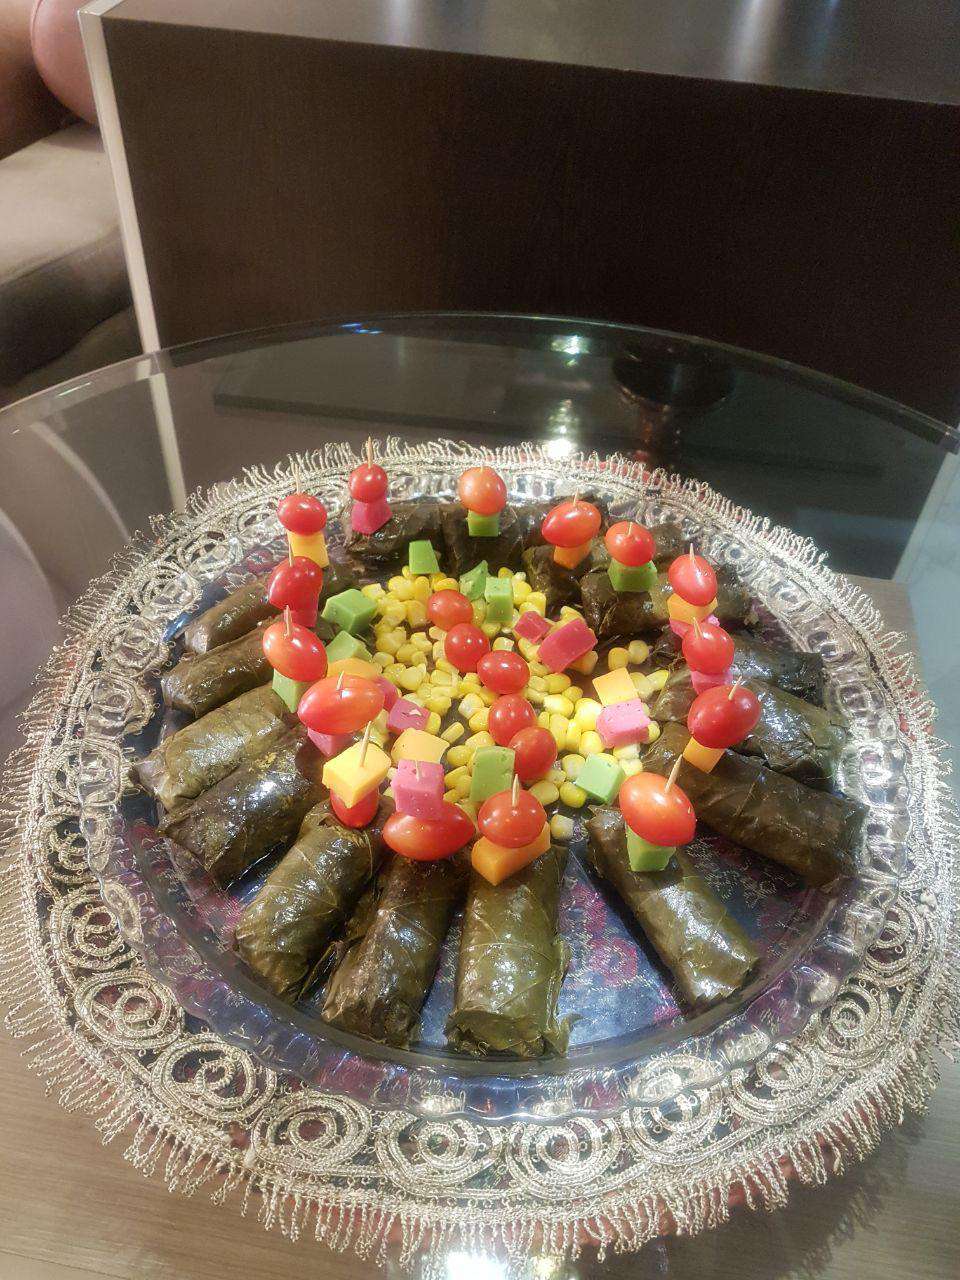 A Pleasant Homemade Dinner Among an Iranian Family